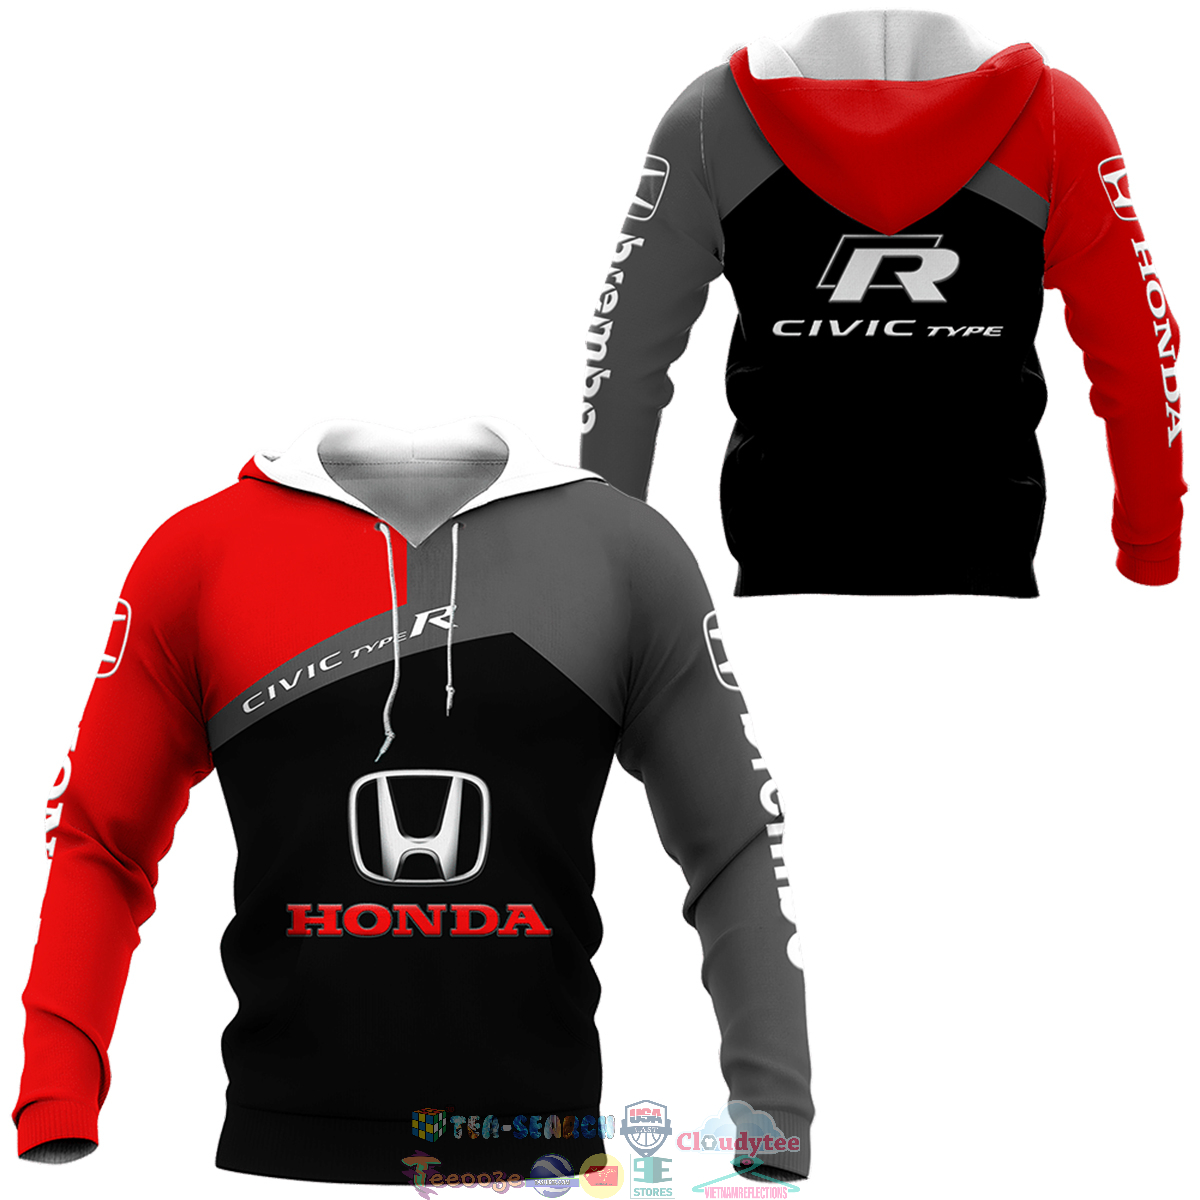 Honda Civic Type R ver 3 3D hoodie and t-shirt – Saleoff